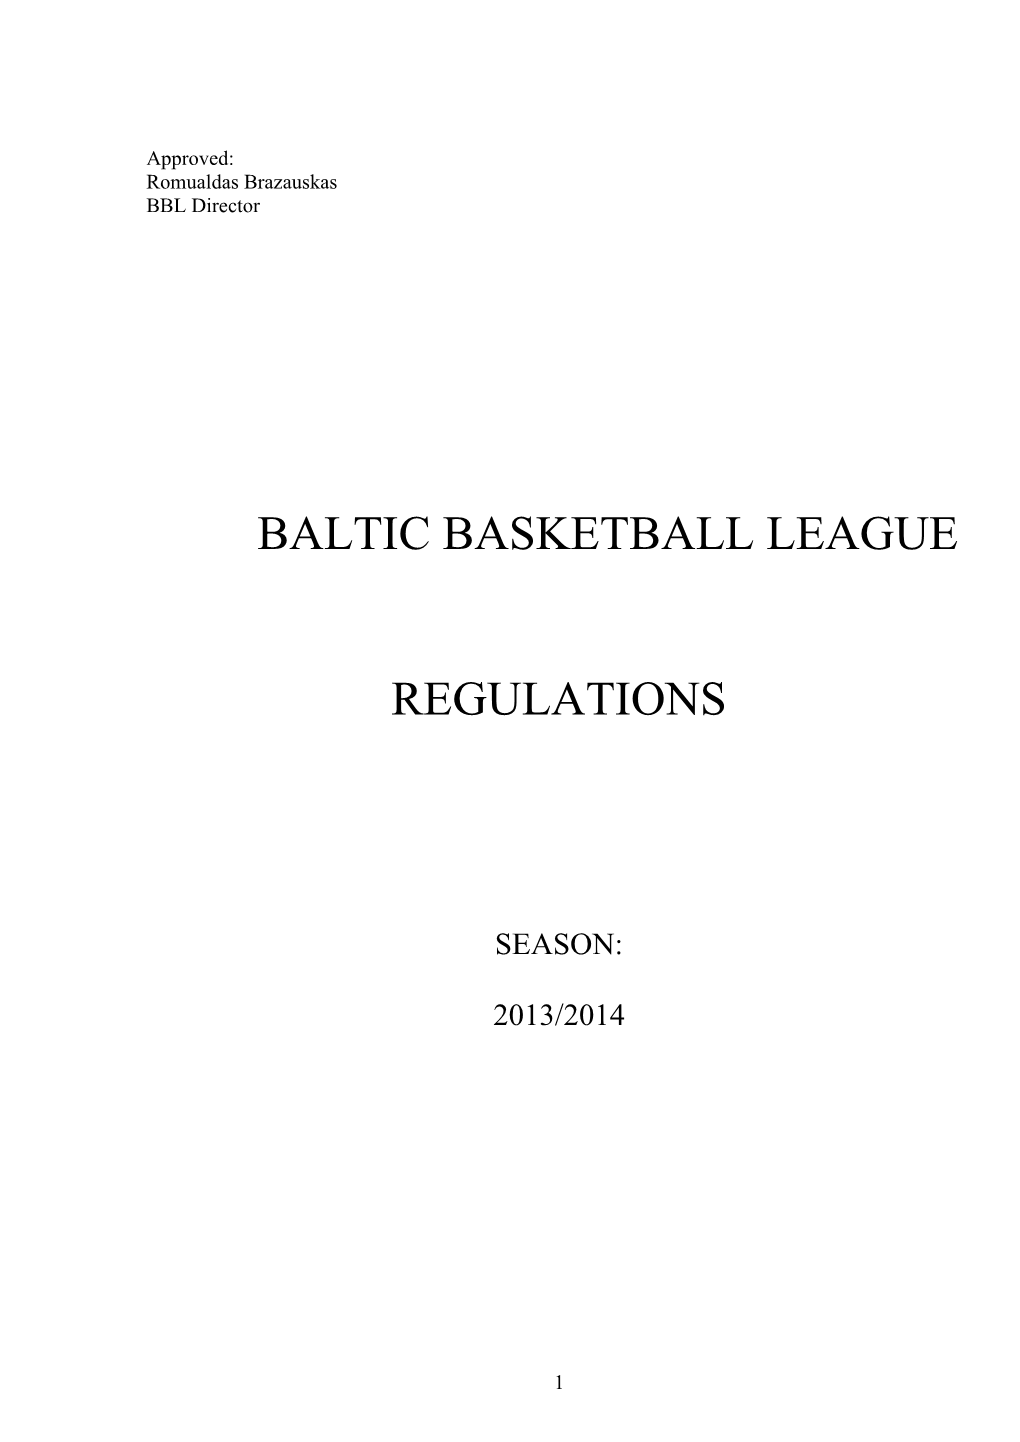 BBL Regulations for the 2013/14 Season